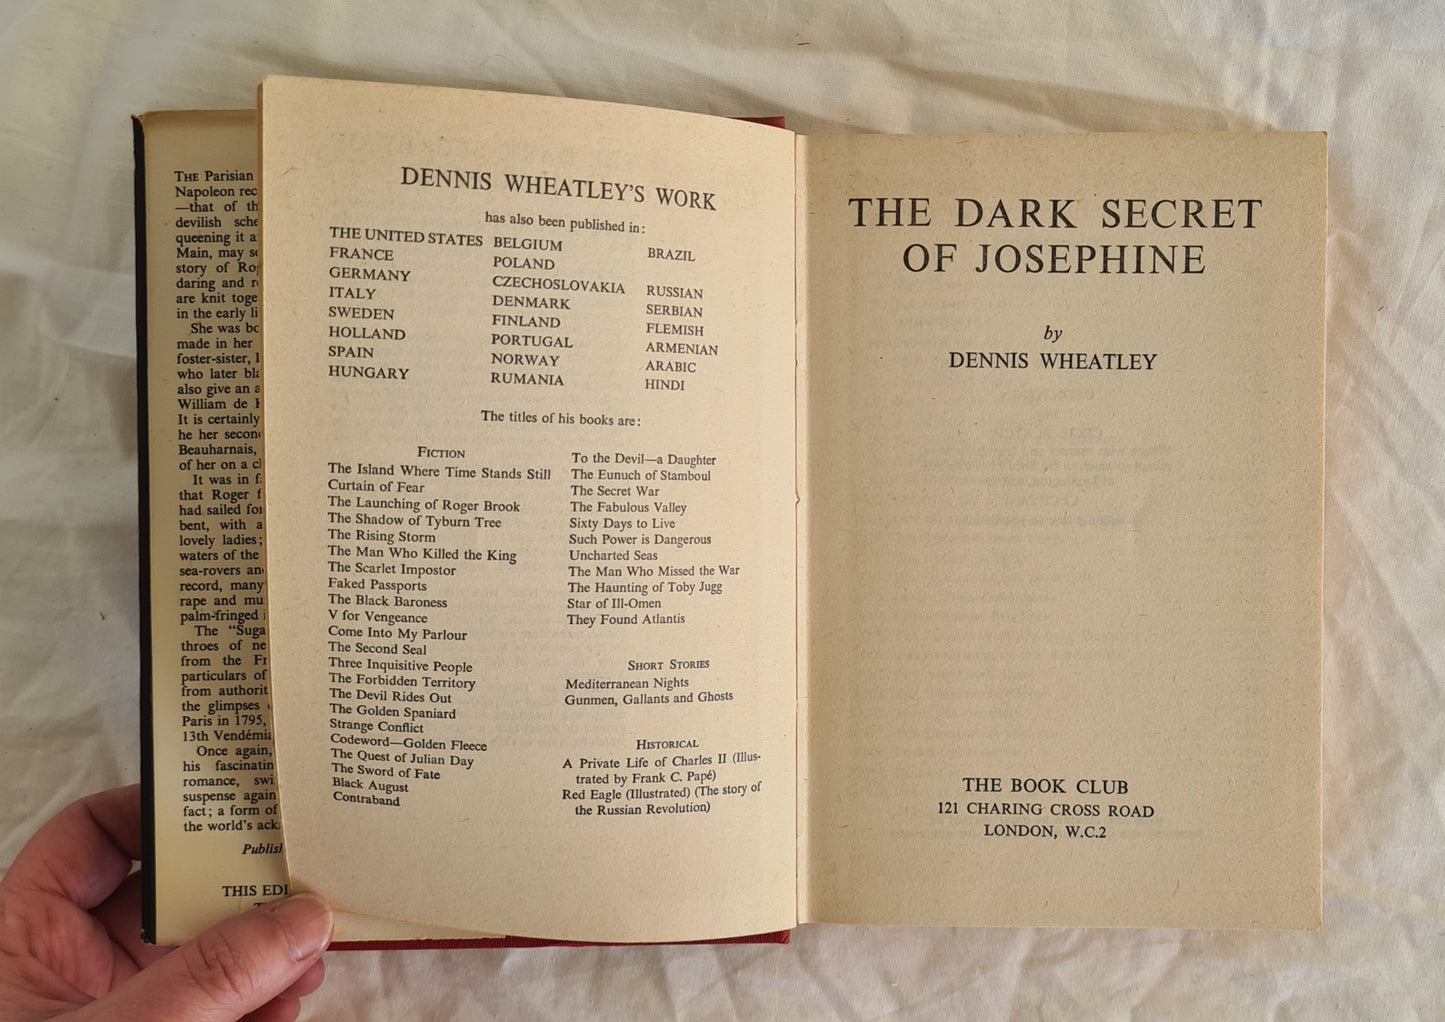 The Dark Secret of Josephine by Dennis Wheatley